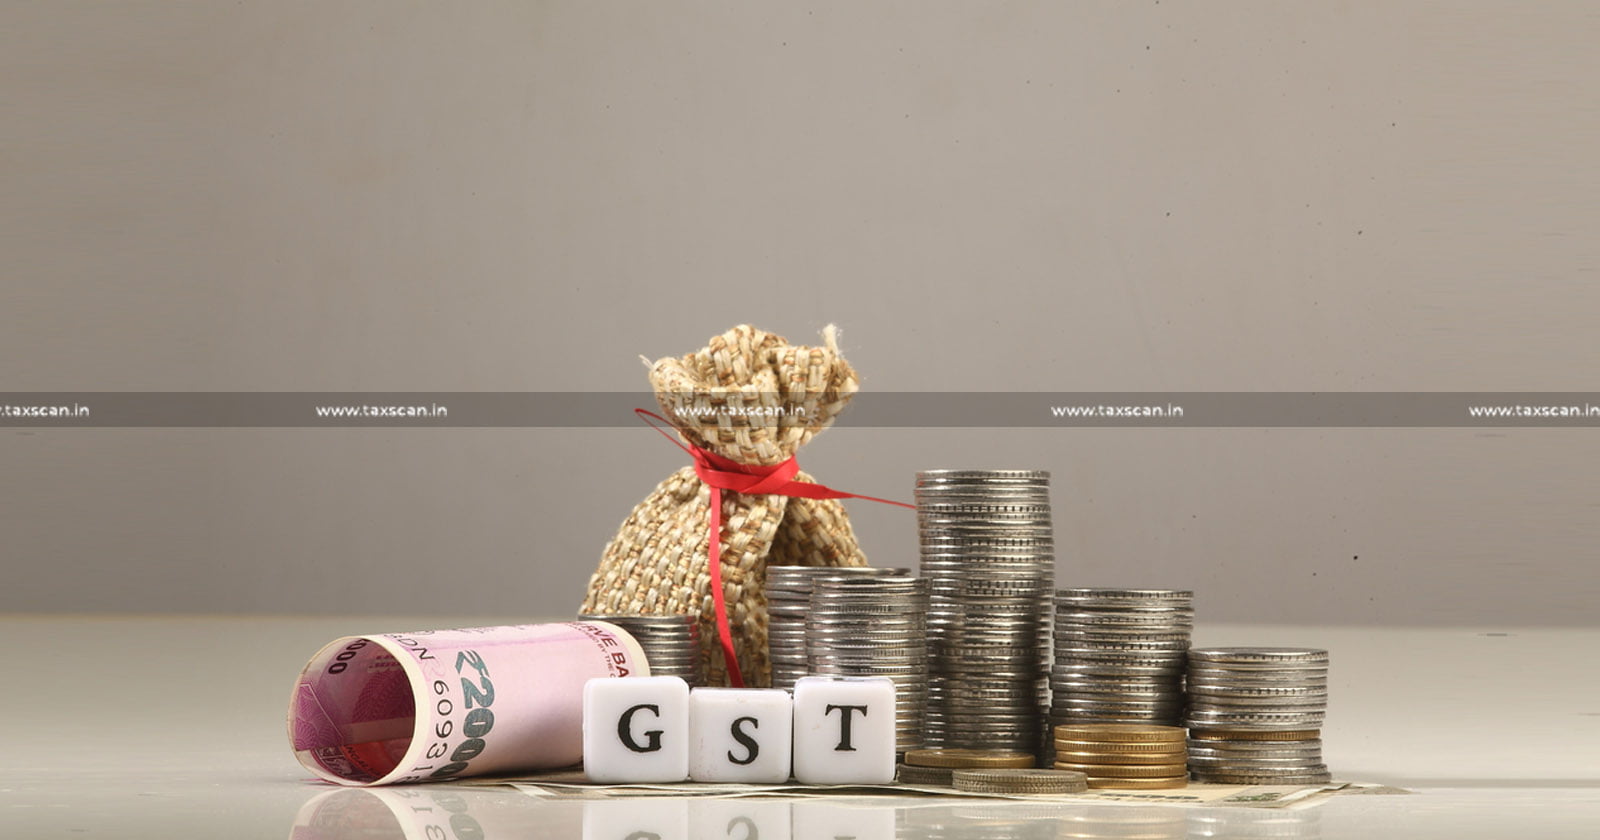 Company Director - GST office - GST - GST Demand - Deposit GST Demand - Punjab and Haryana High Court - Refund - Interest - taxscan